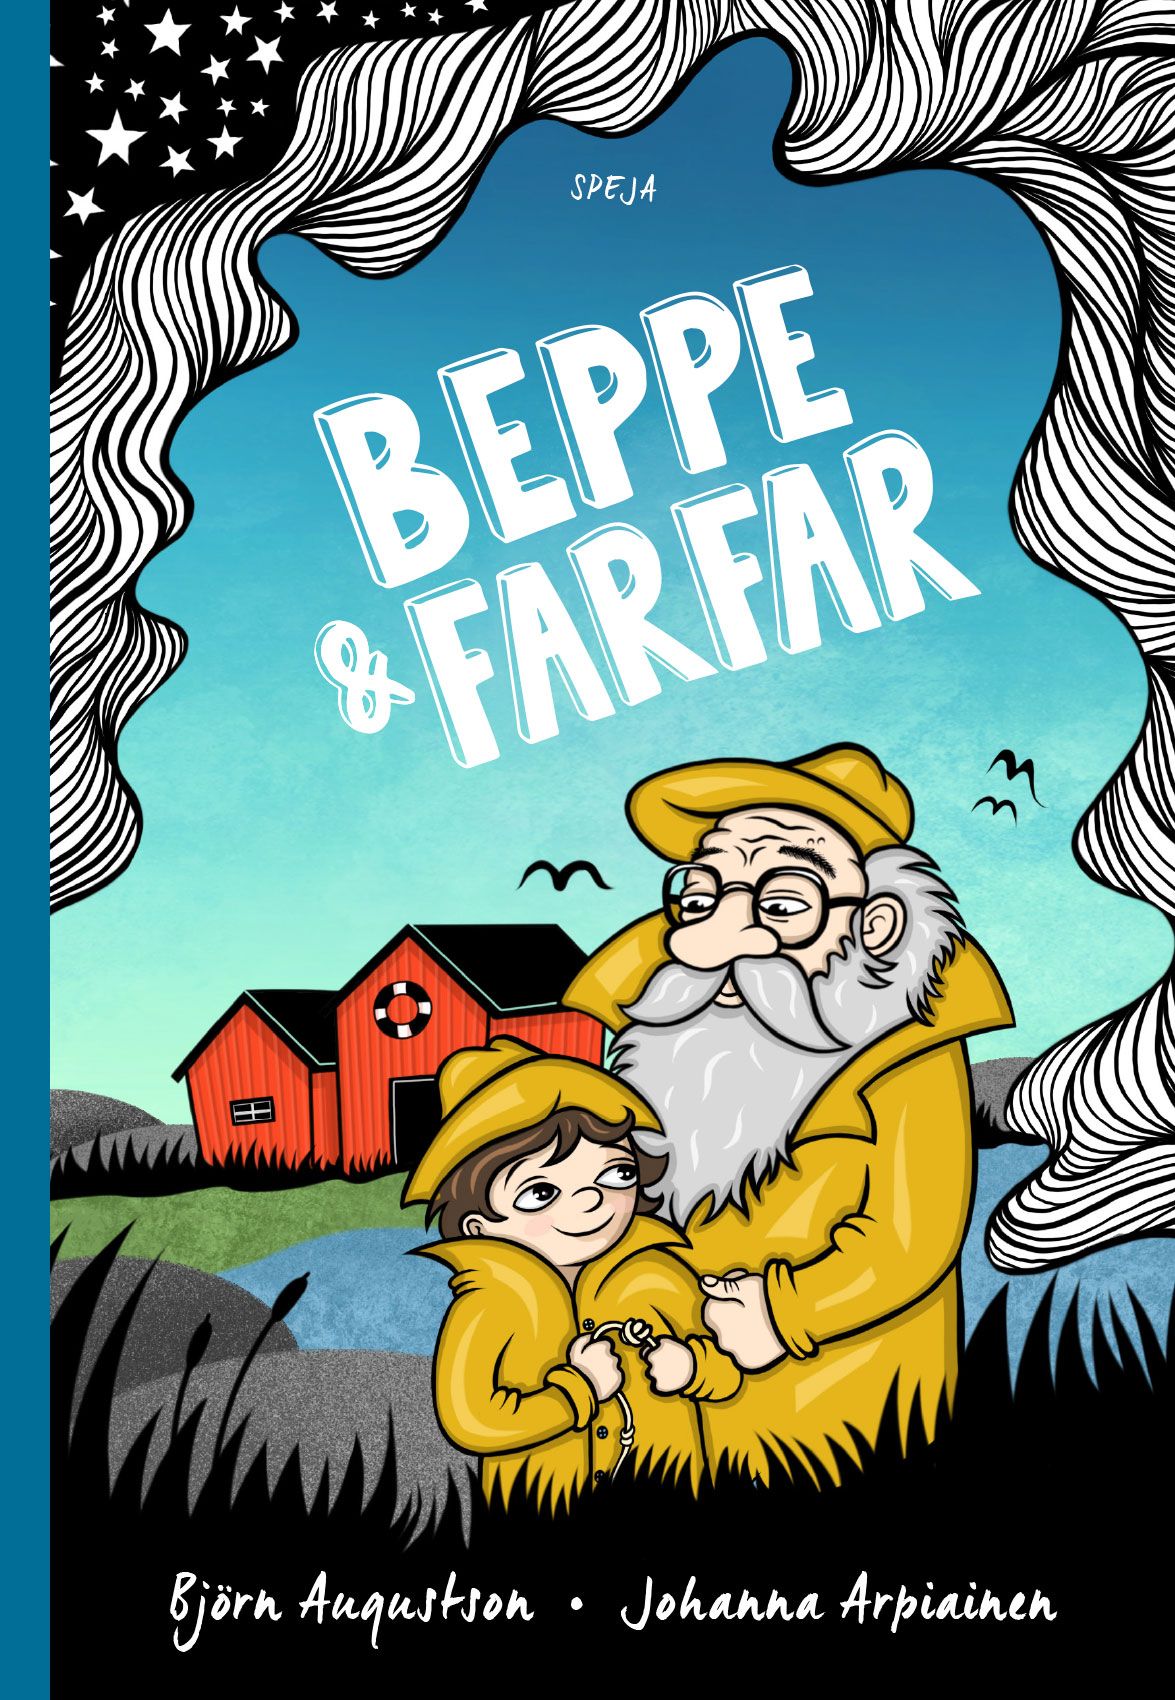 Beppe & Farfar, audiobook by Björn Augustson